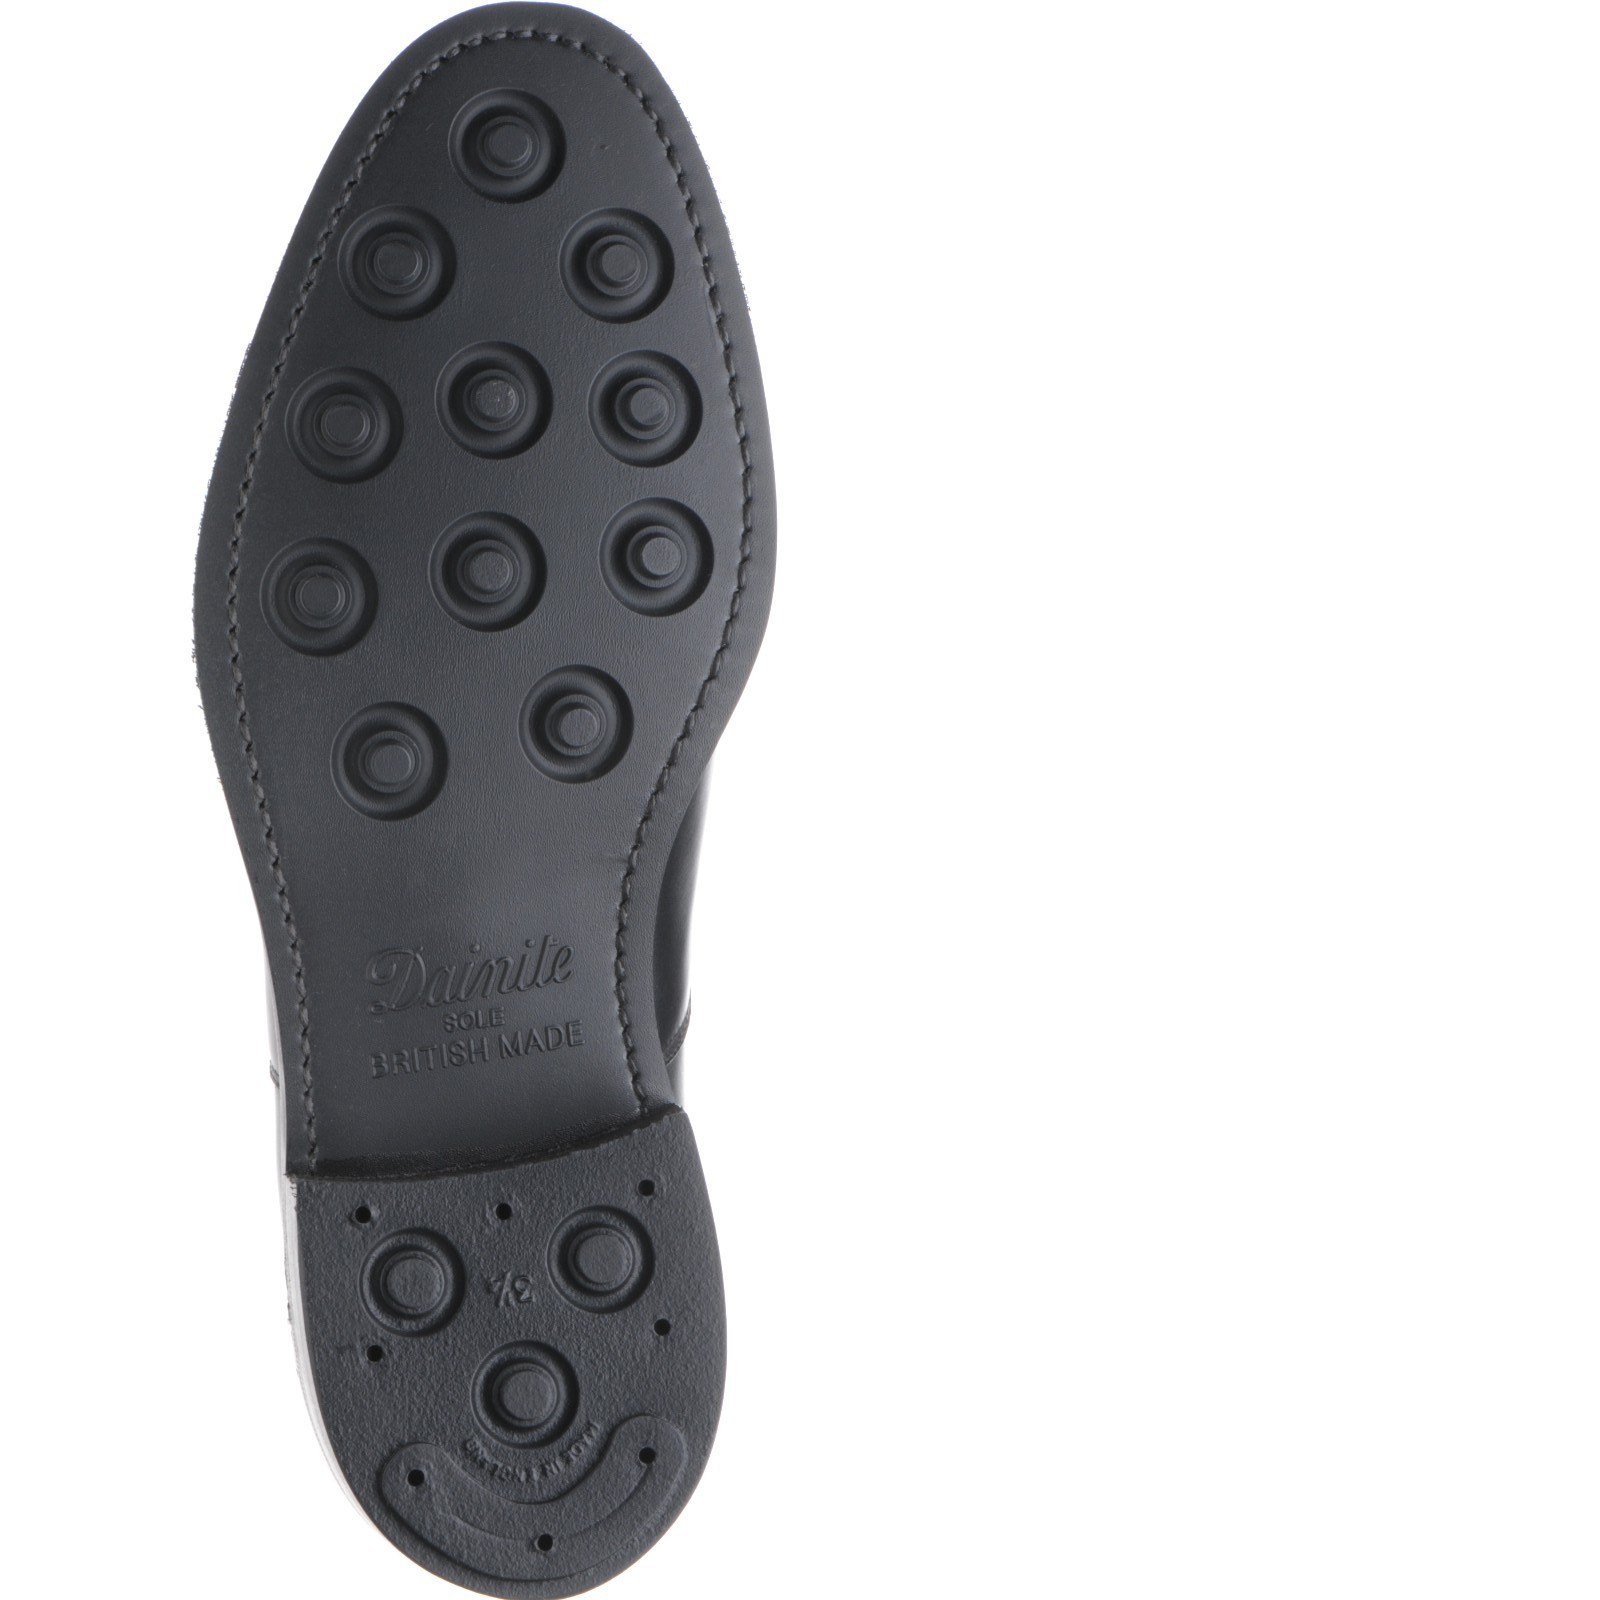 Herring shoes | Herring Classic | Knightsbridge RUBBER rubber-soled ...